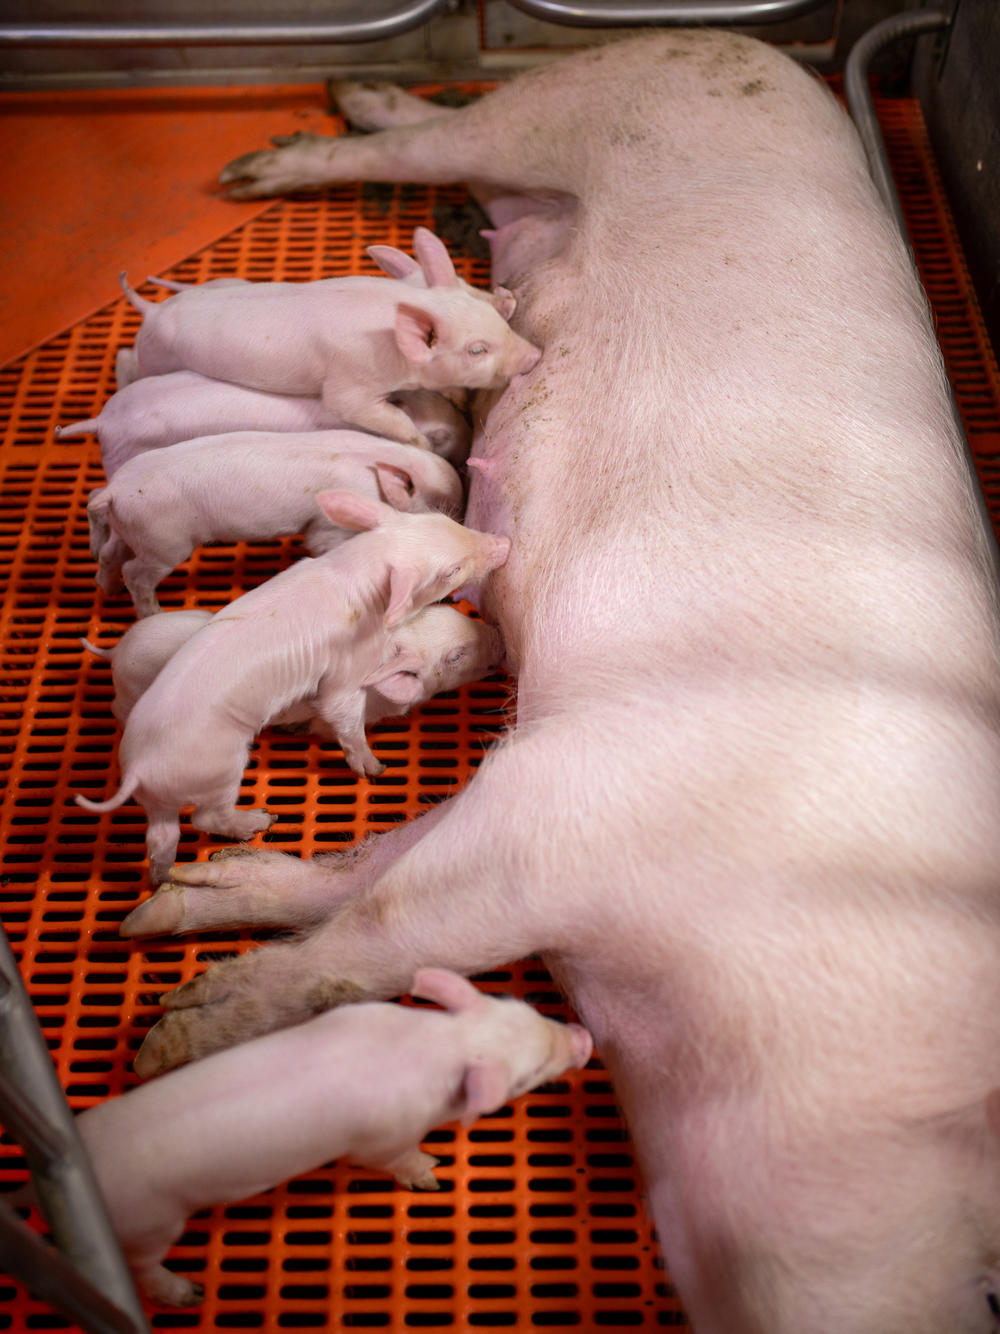 Piglets nurse in a pen at a Revivicor research farm.